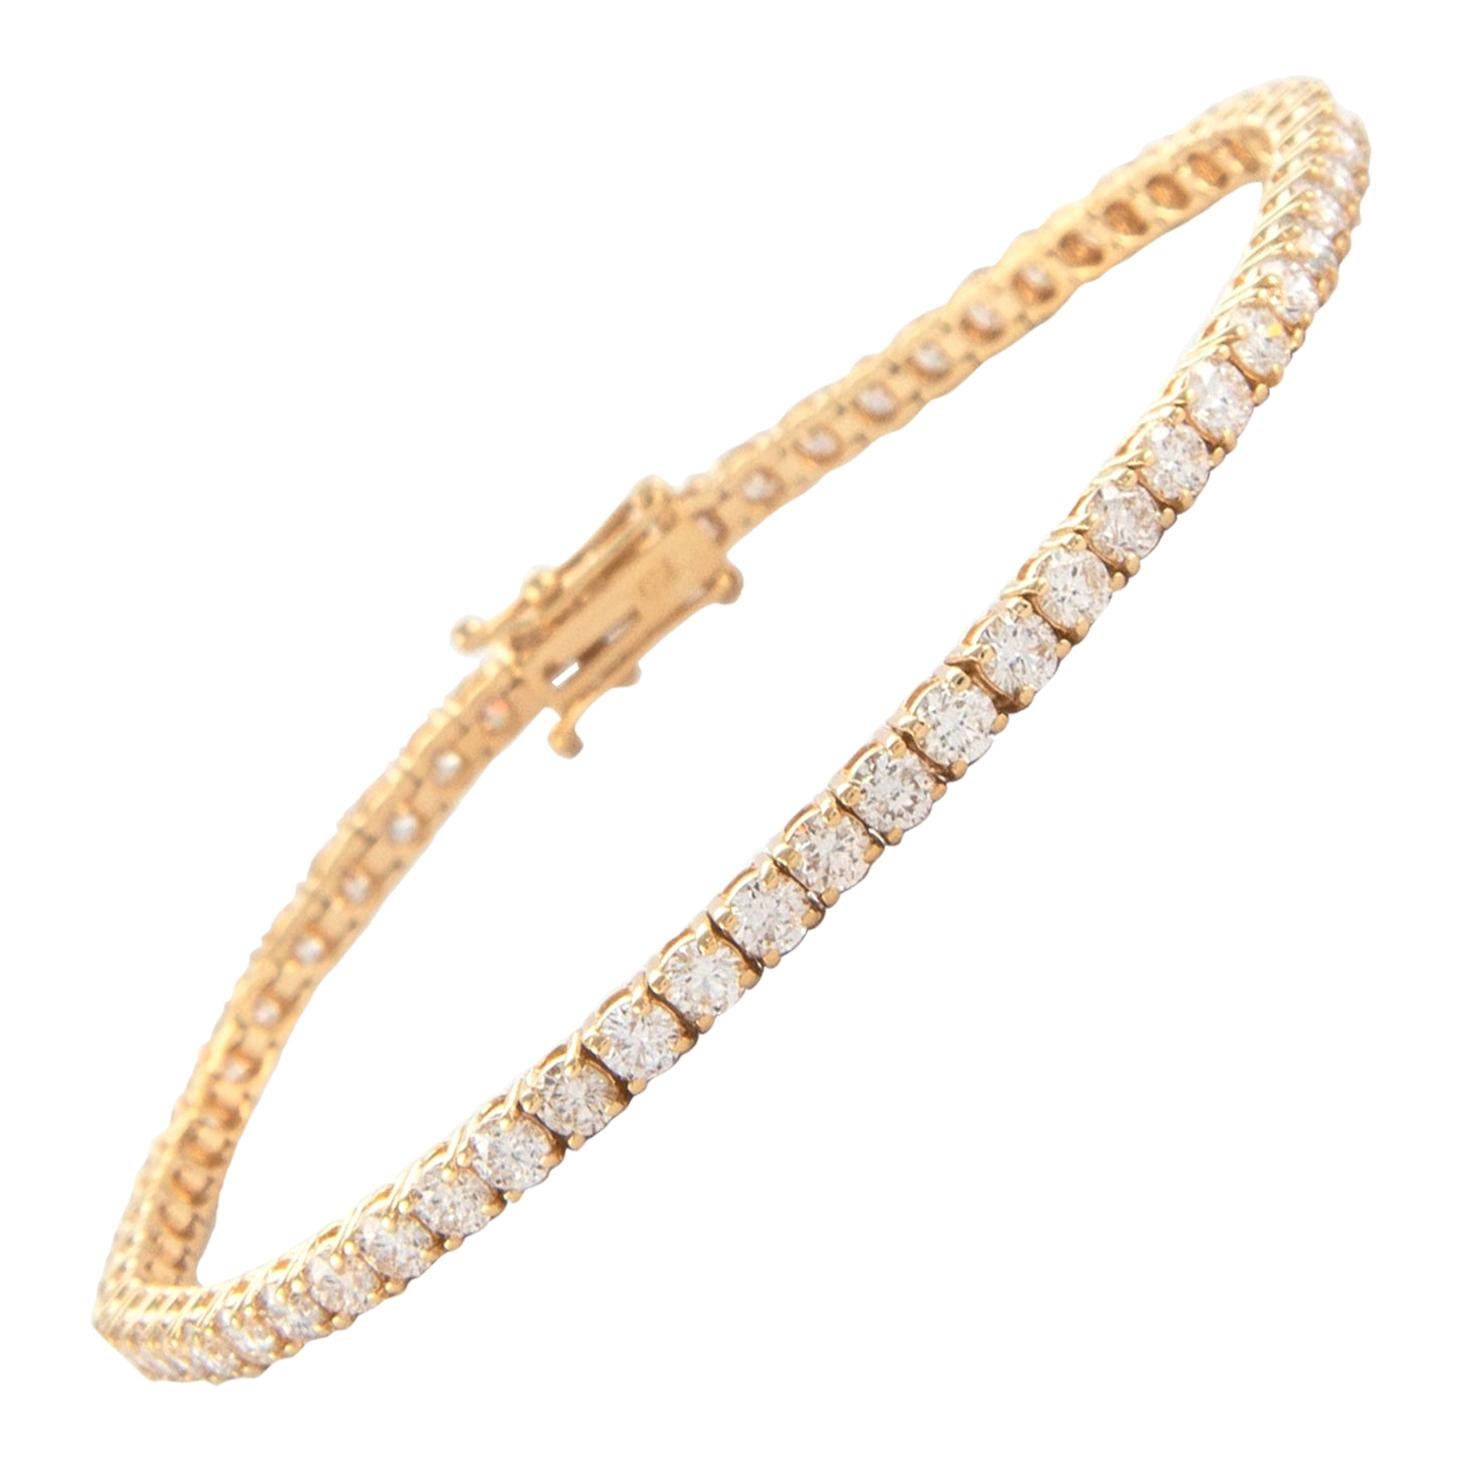 Alexander Bracelet tennis en or jaune 18 carats avec diamants de 5,51 carats